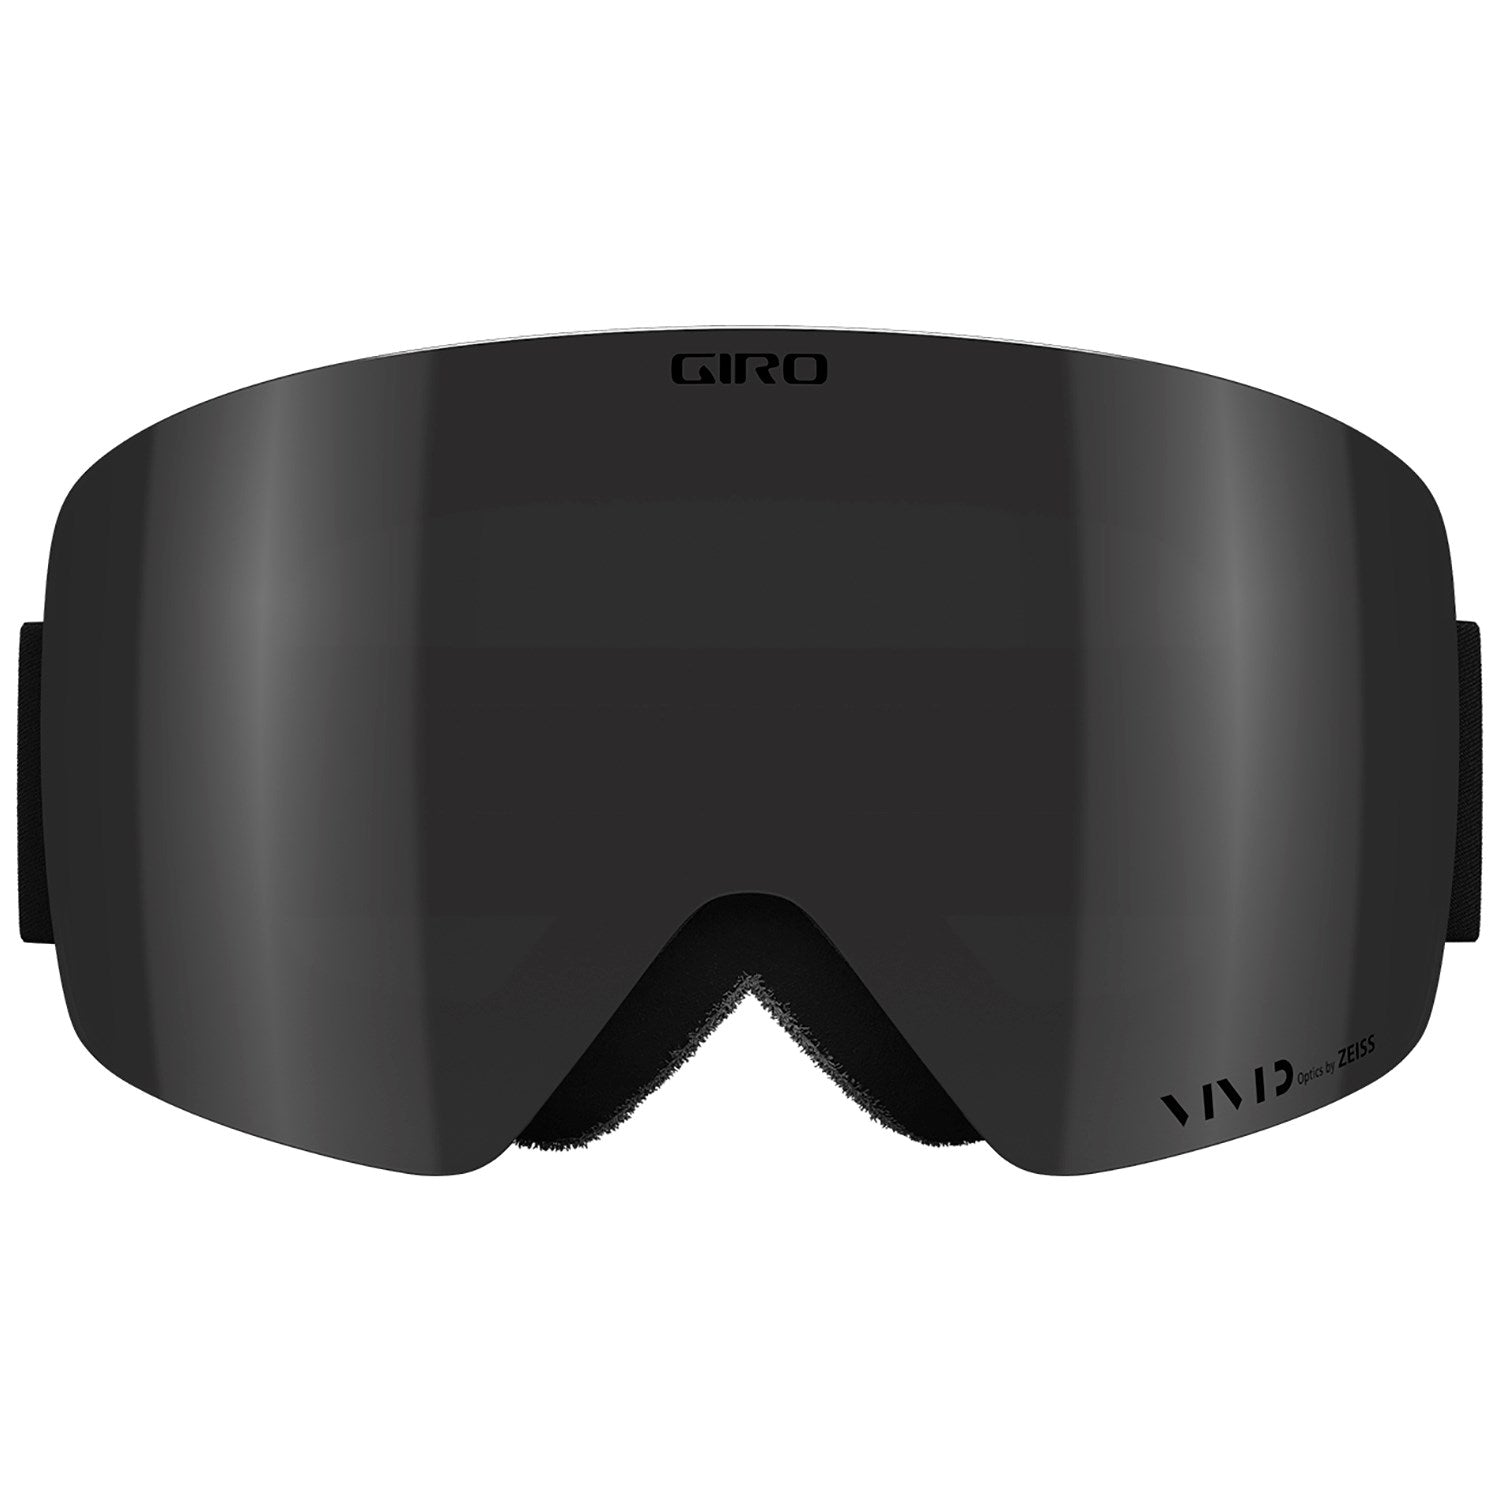 2023 Giro Contour Snowboarding Goggles For Sale